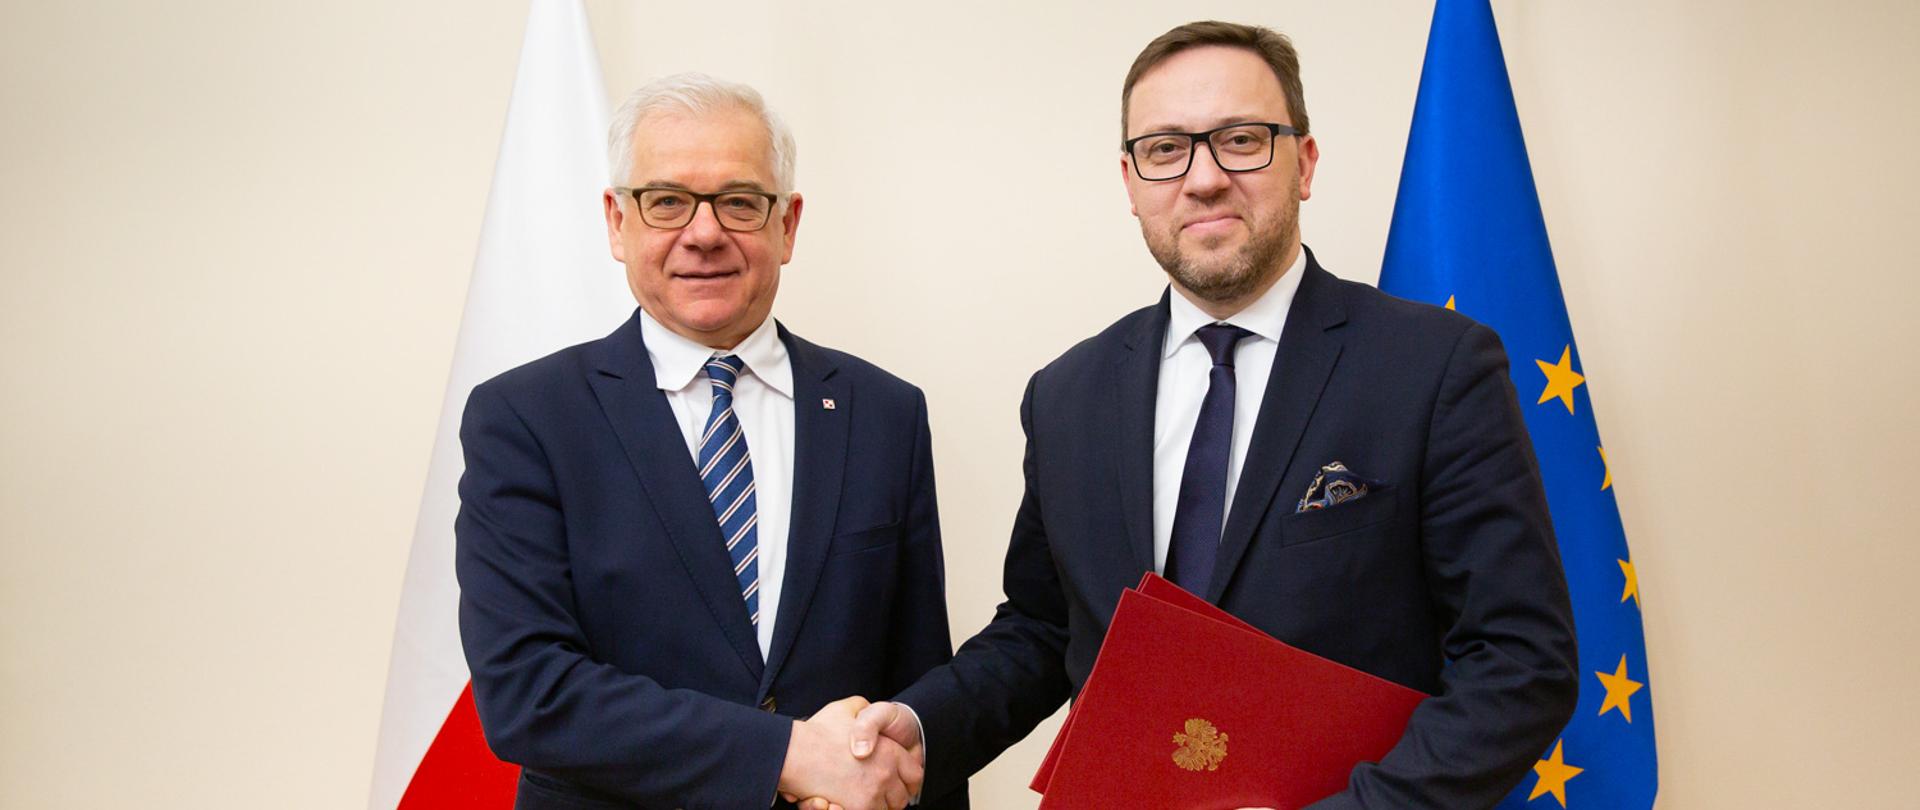 Bartosz Cichocki appointed new Polish ambassador to Ukraine